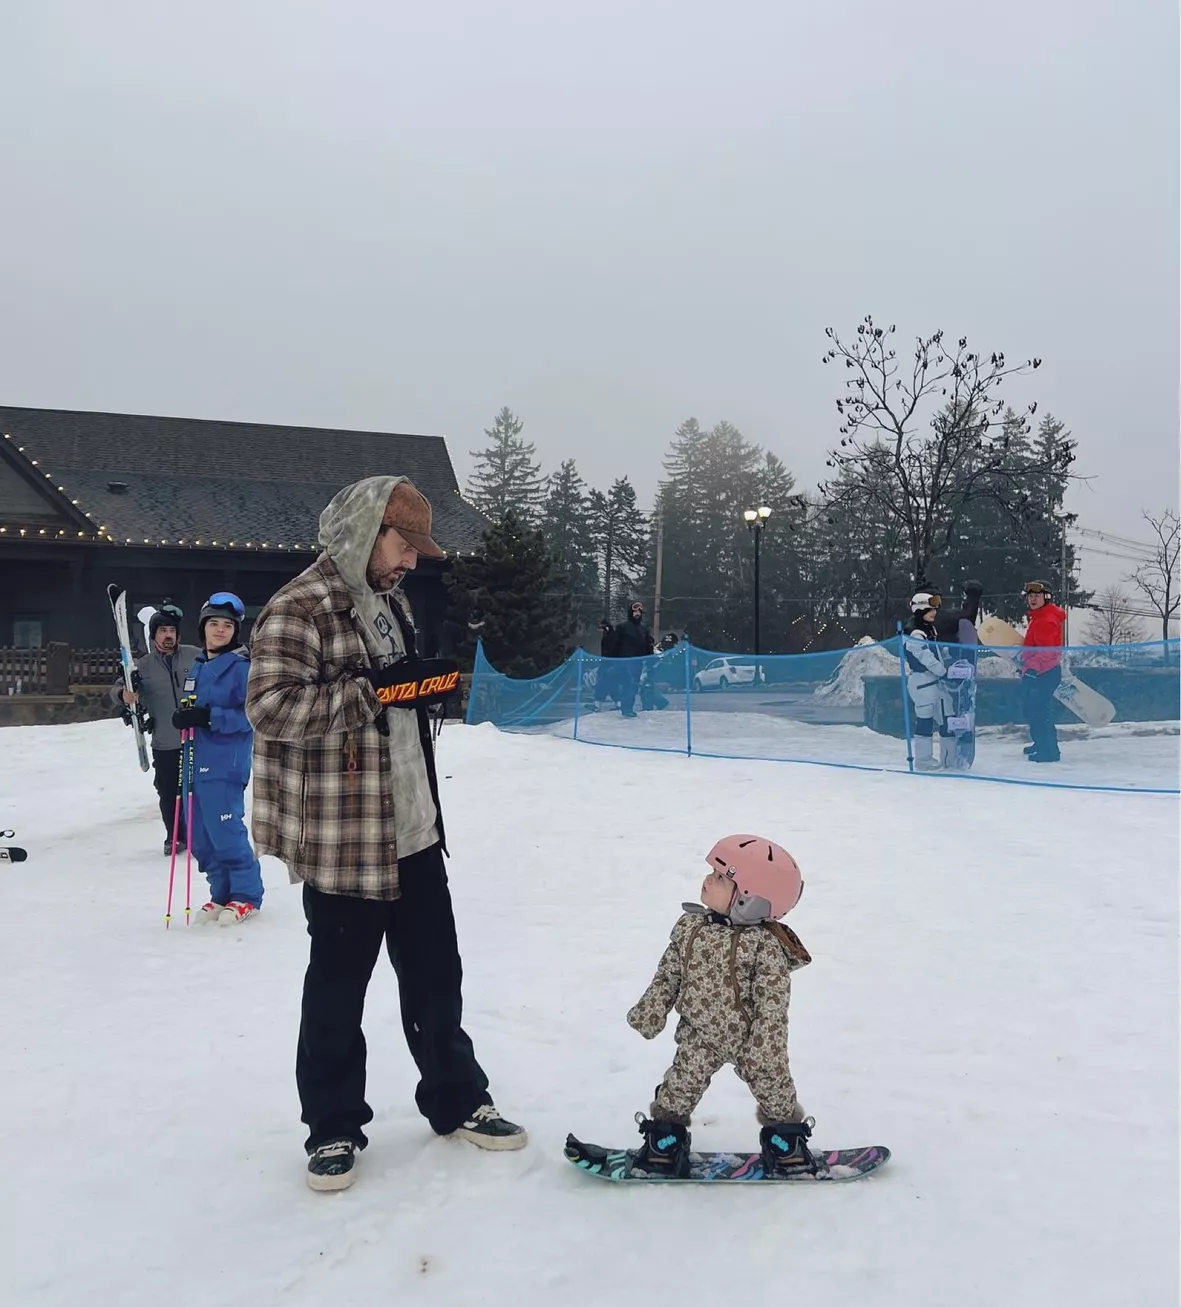 Kids' Burton Riglet Snowboard curated on LTK